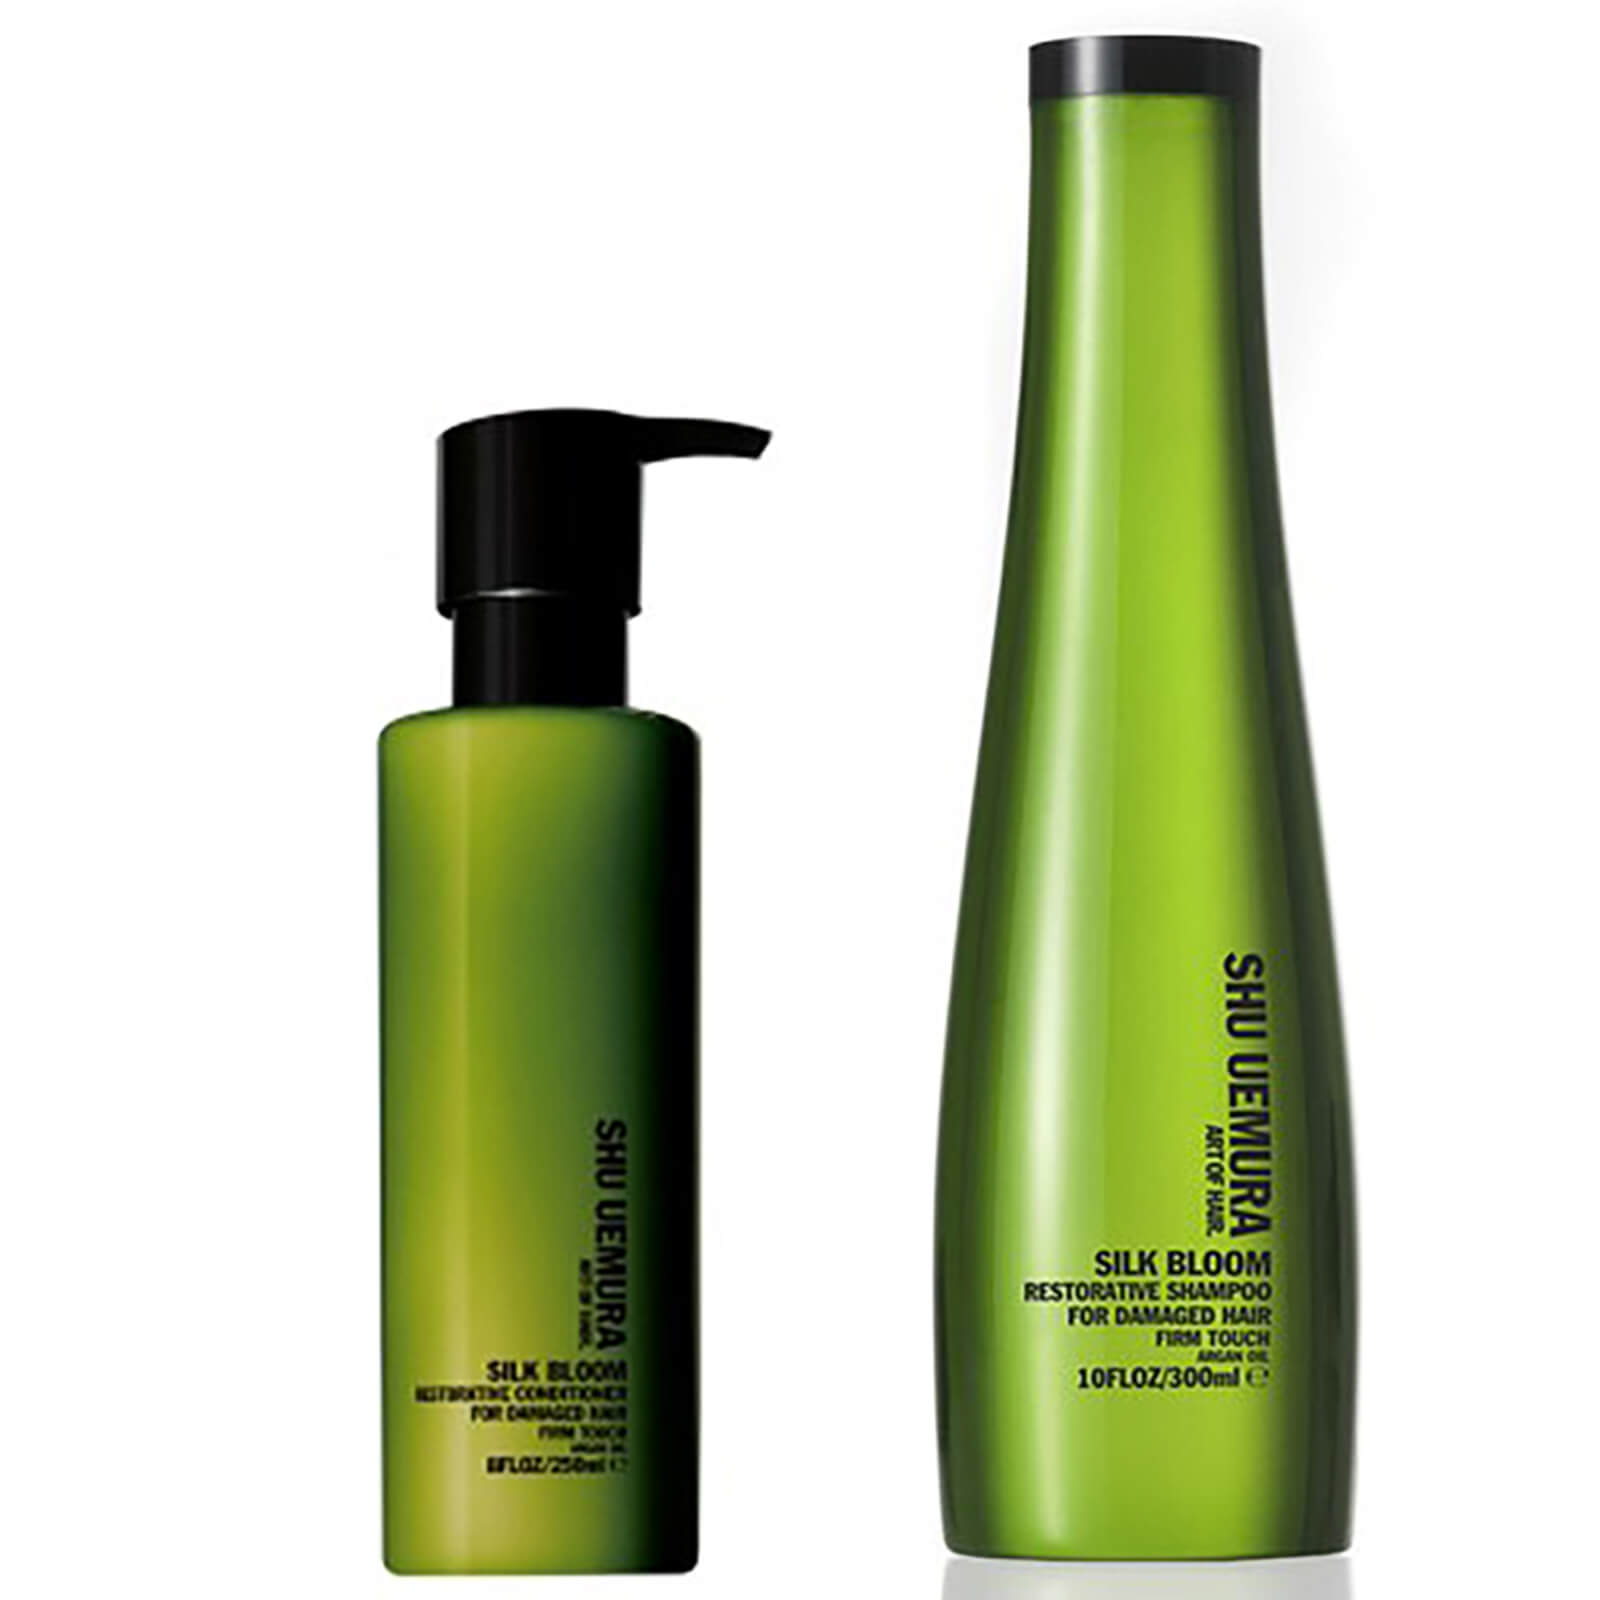 Shu Uemura Art of Hair Silk Bloom Shampoo (300ml) and Conditioner (250ml) product